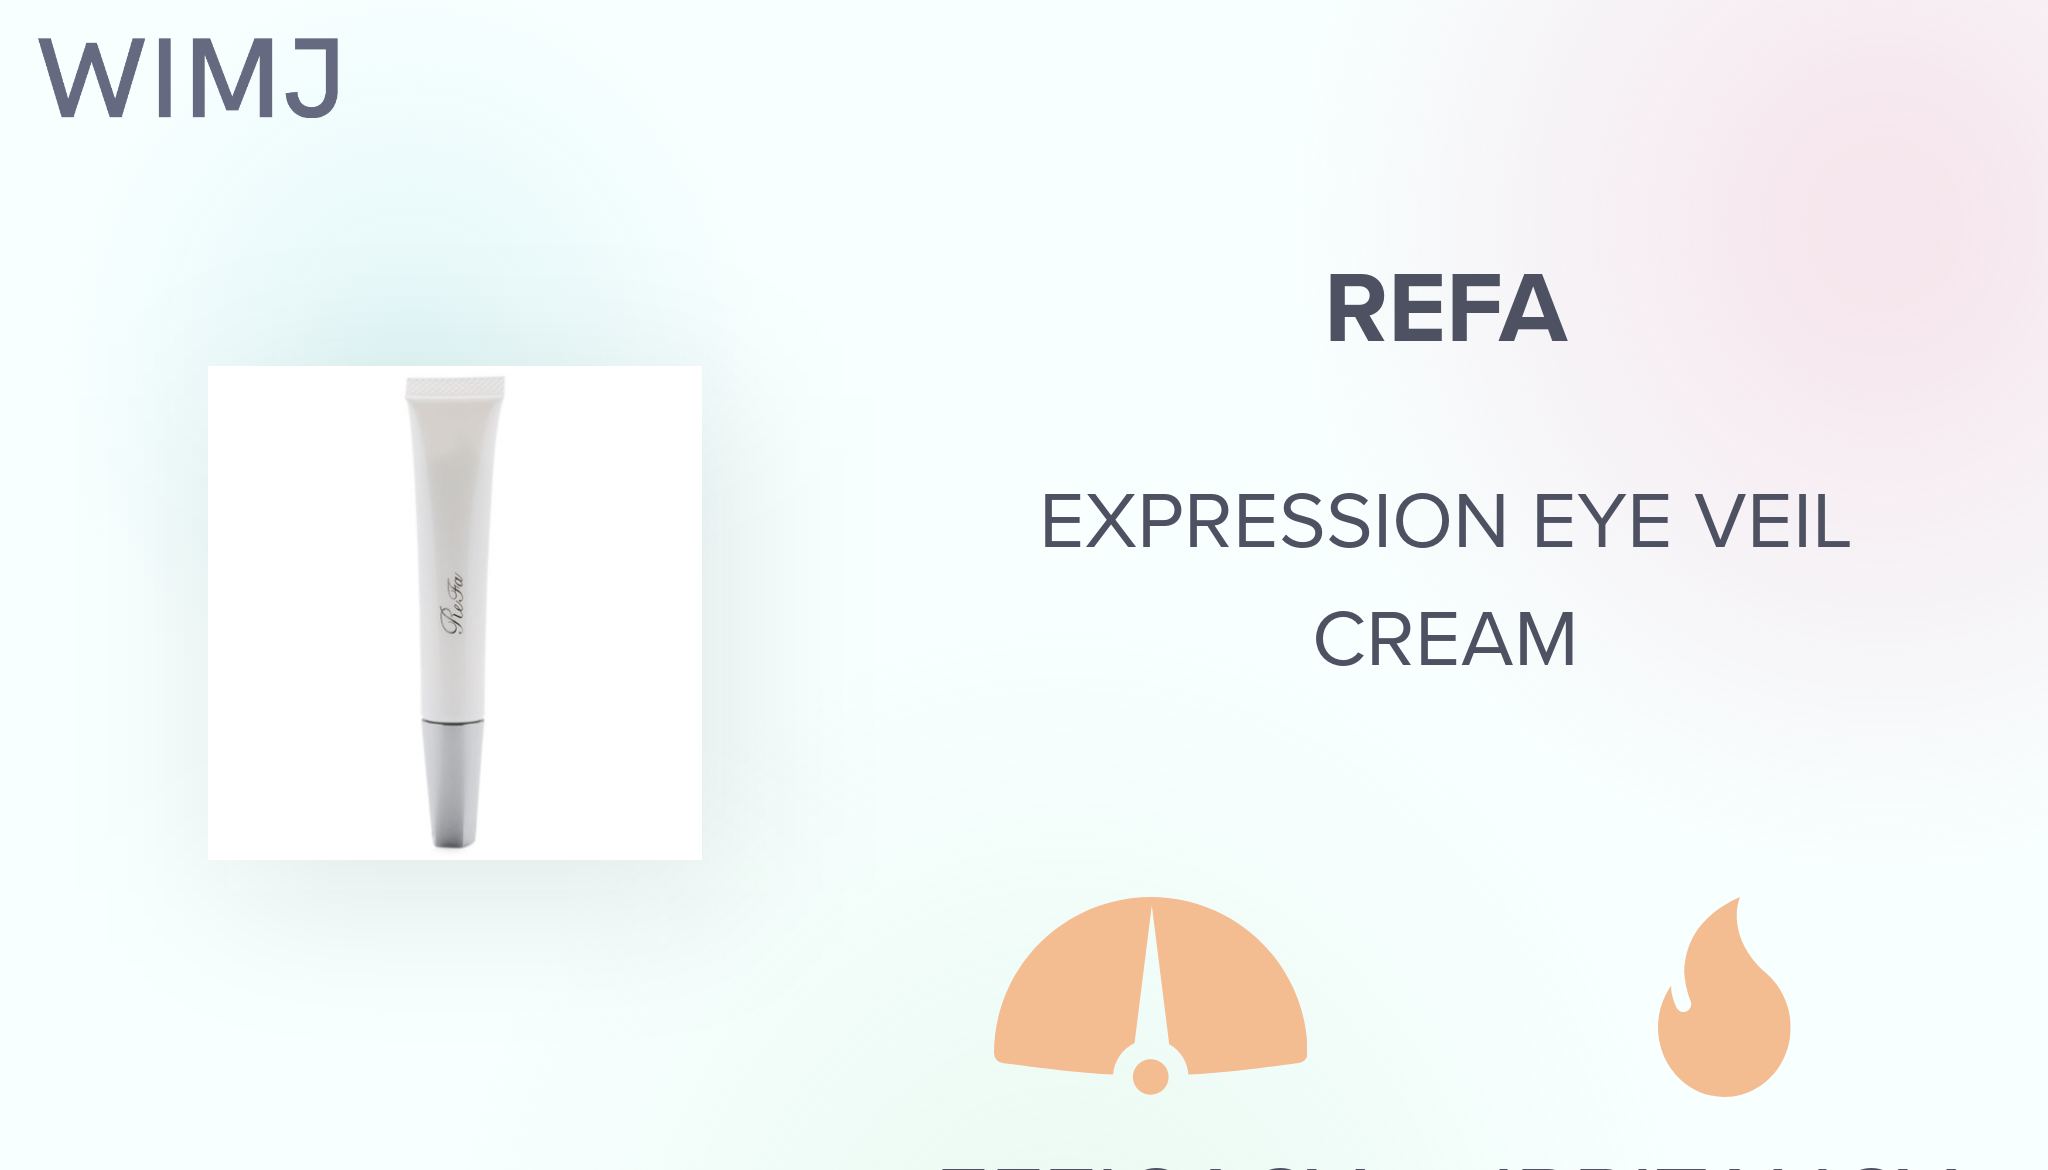 Review: ReFa - EXPRESSION EYE VEIL CREAM - WIMJ